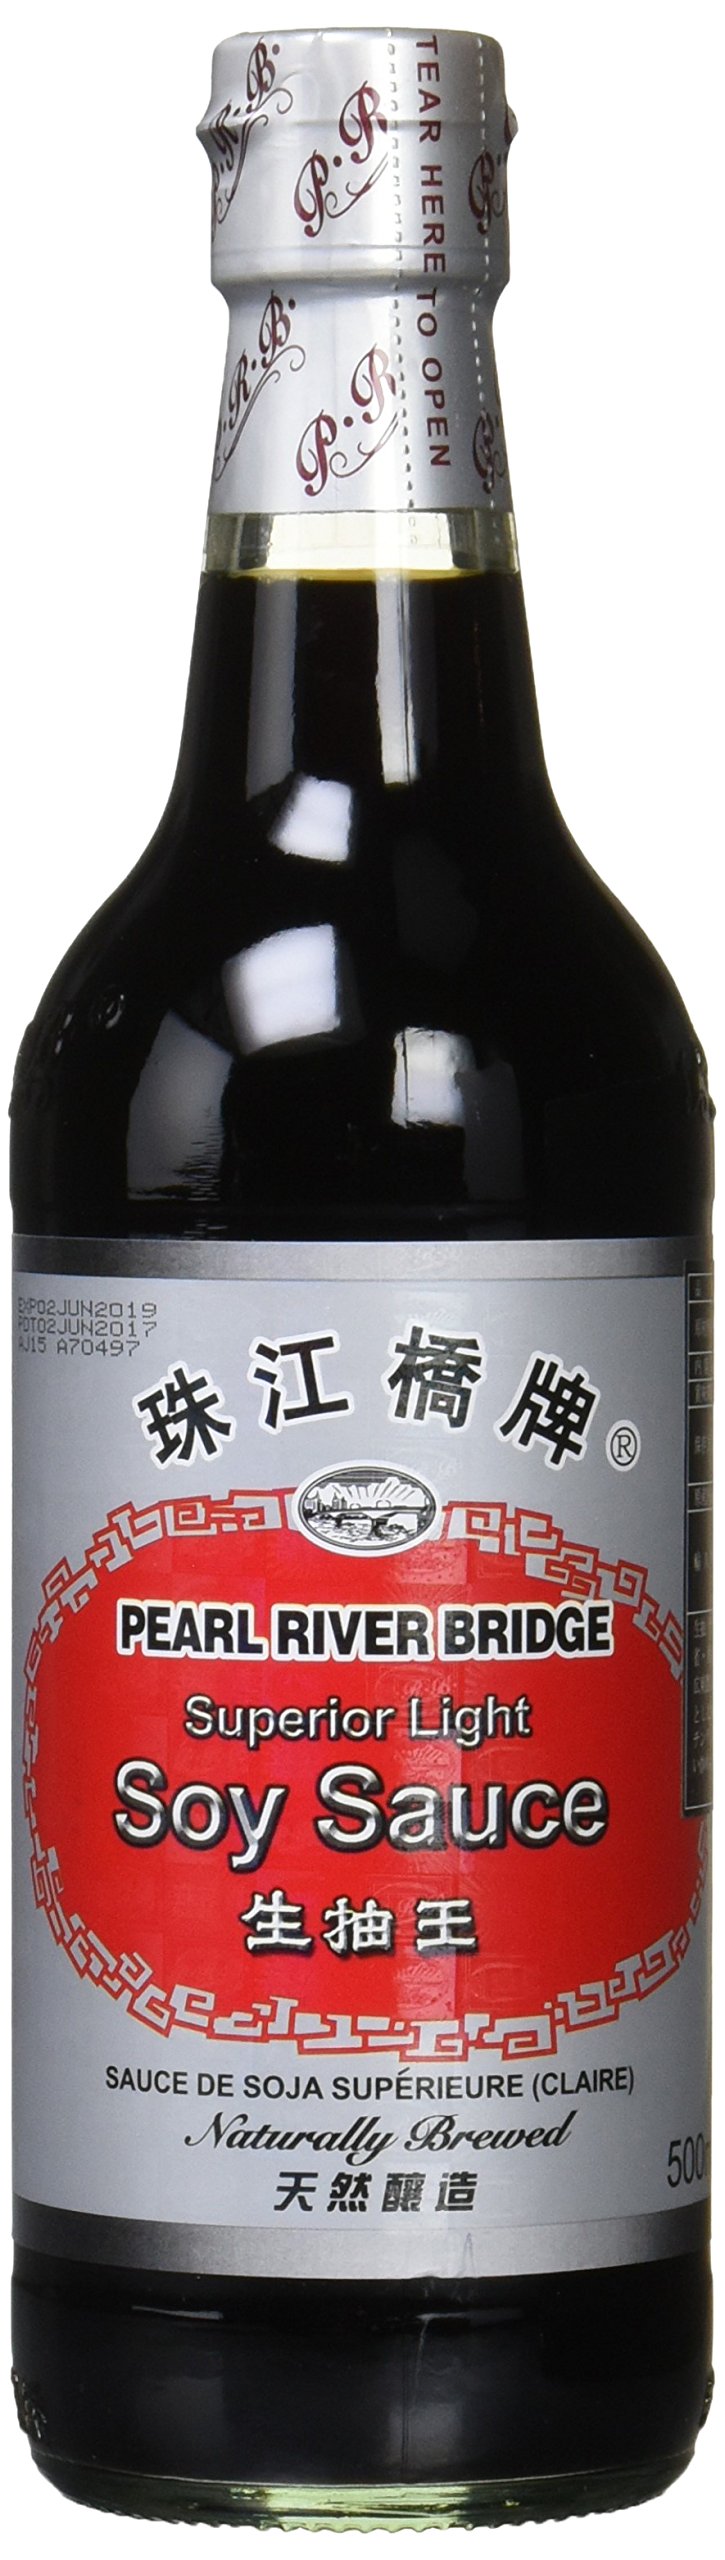 PEARL RIVER BRIDGE - Sauce soja supérieure (claire) - 150mL